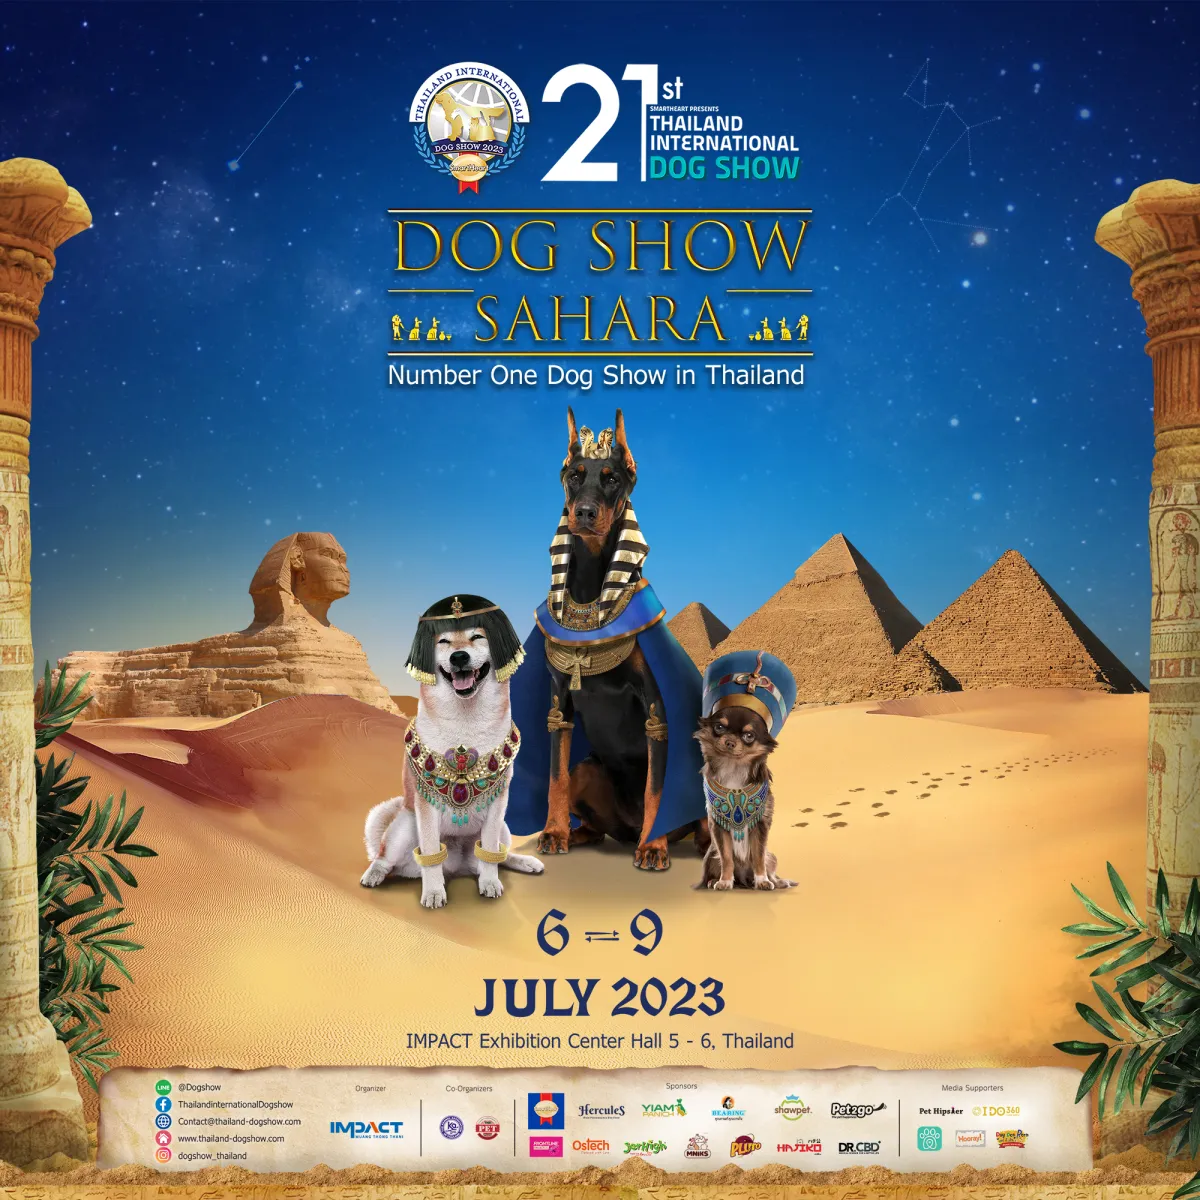 Travel Calendar – The 21st Thailand International Dog Show (6-9 July 2023)